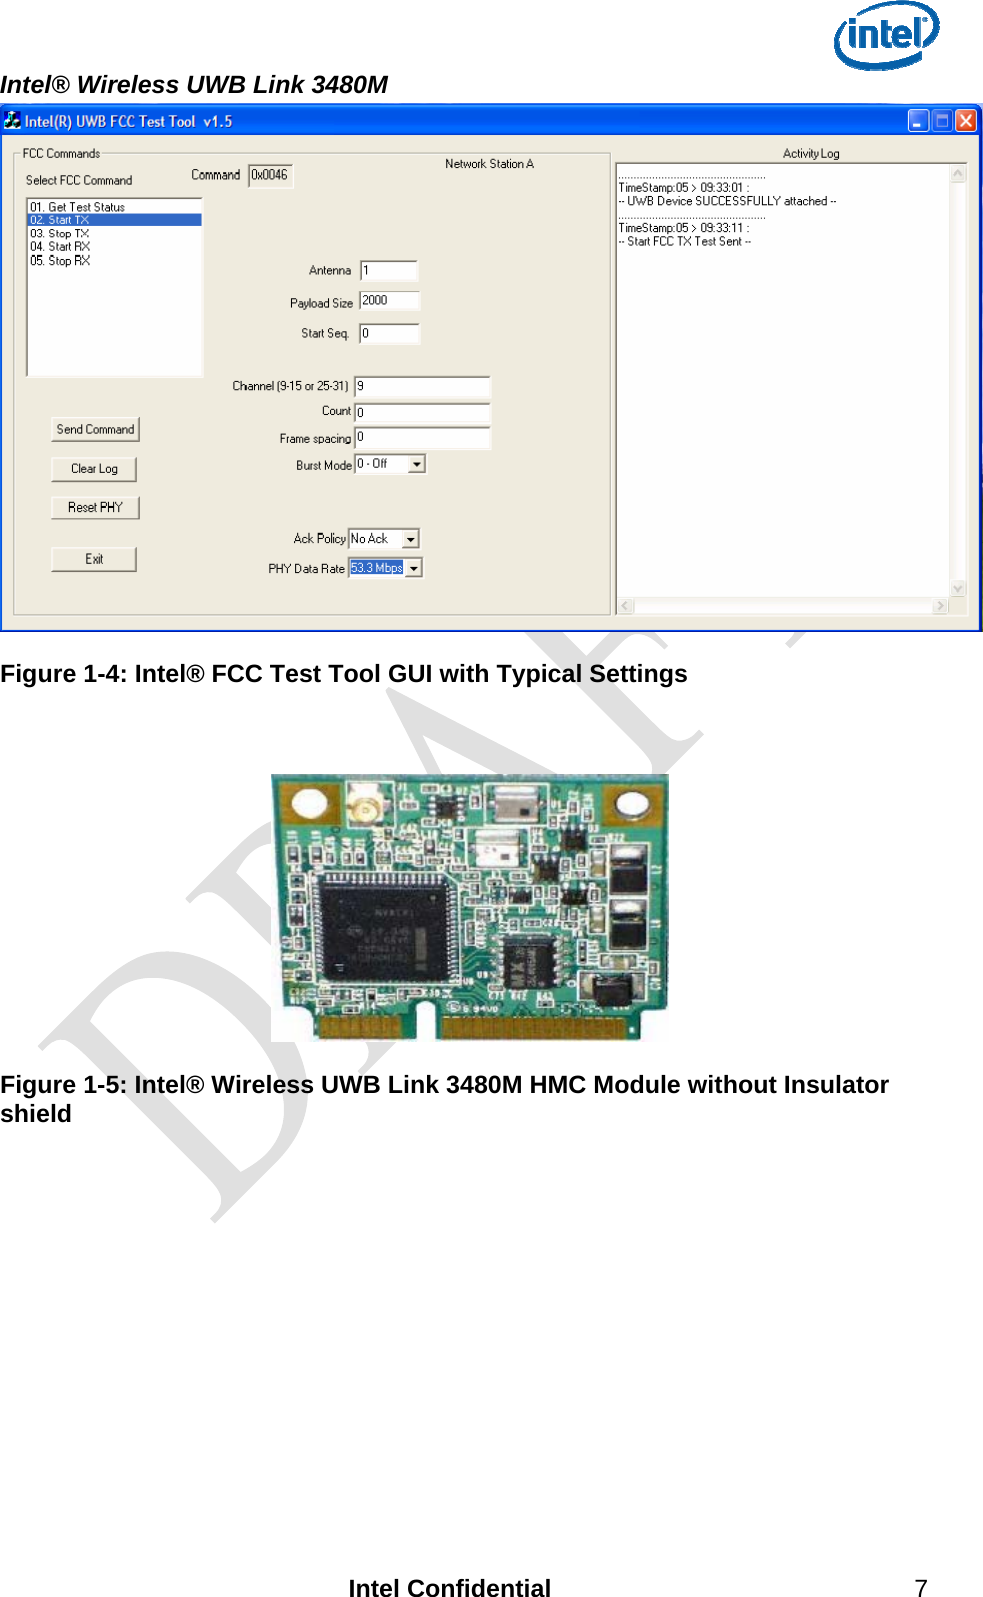  Intel® Wireless UWB Link 3480M     Figure 1-4: Intel® FCC Test Tool GUI with Typical Settings      Figure 1-5: Intel® Wireless UWB Link 3480M HMC Module without Insulator shield      Intel Confidential 7 